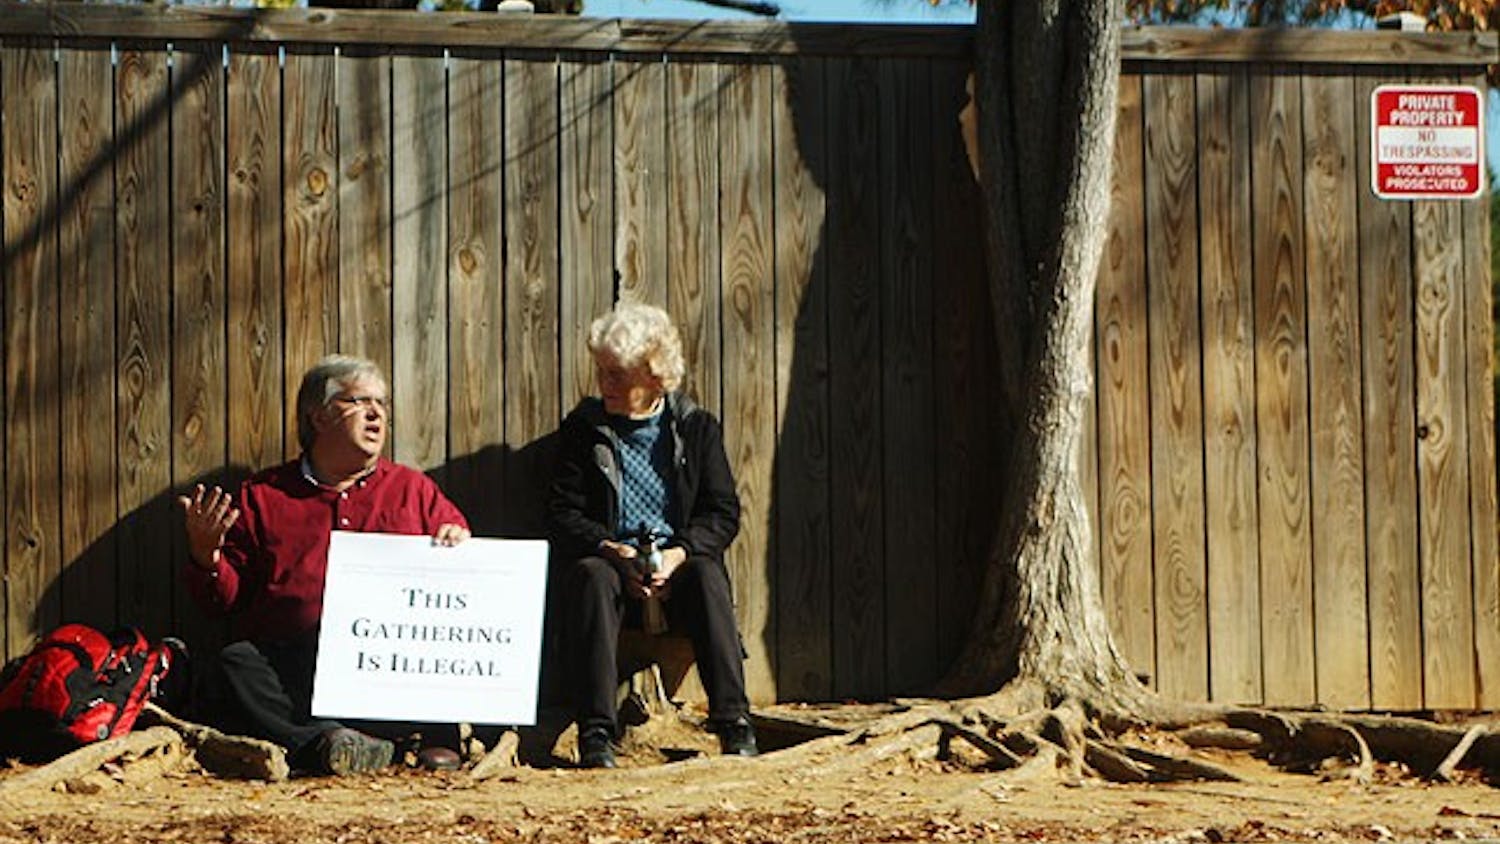 Photo: Carrboro residents protest anti-lingering ordinance (Florence Bryan)